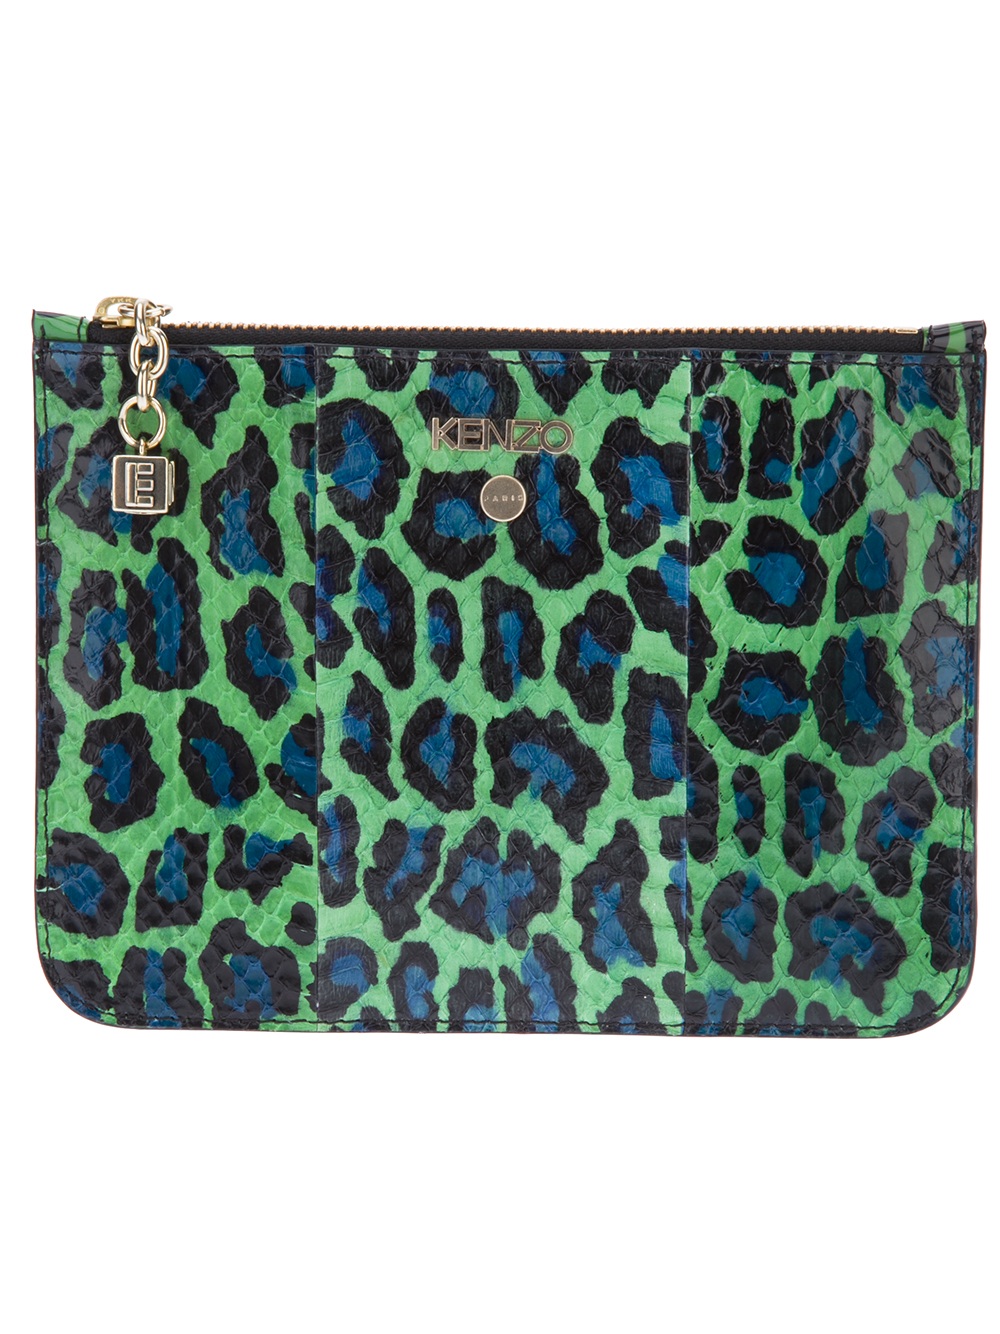 Lyst - Kenzo Leopard Print Makeup Bag in Green